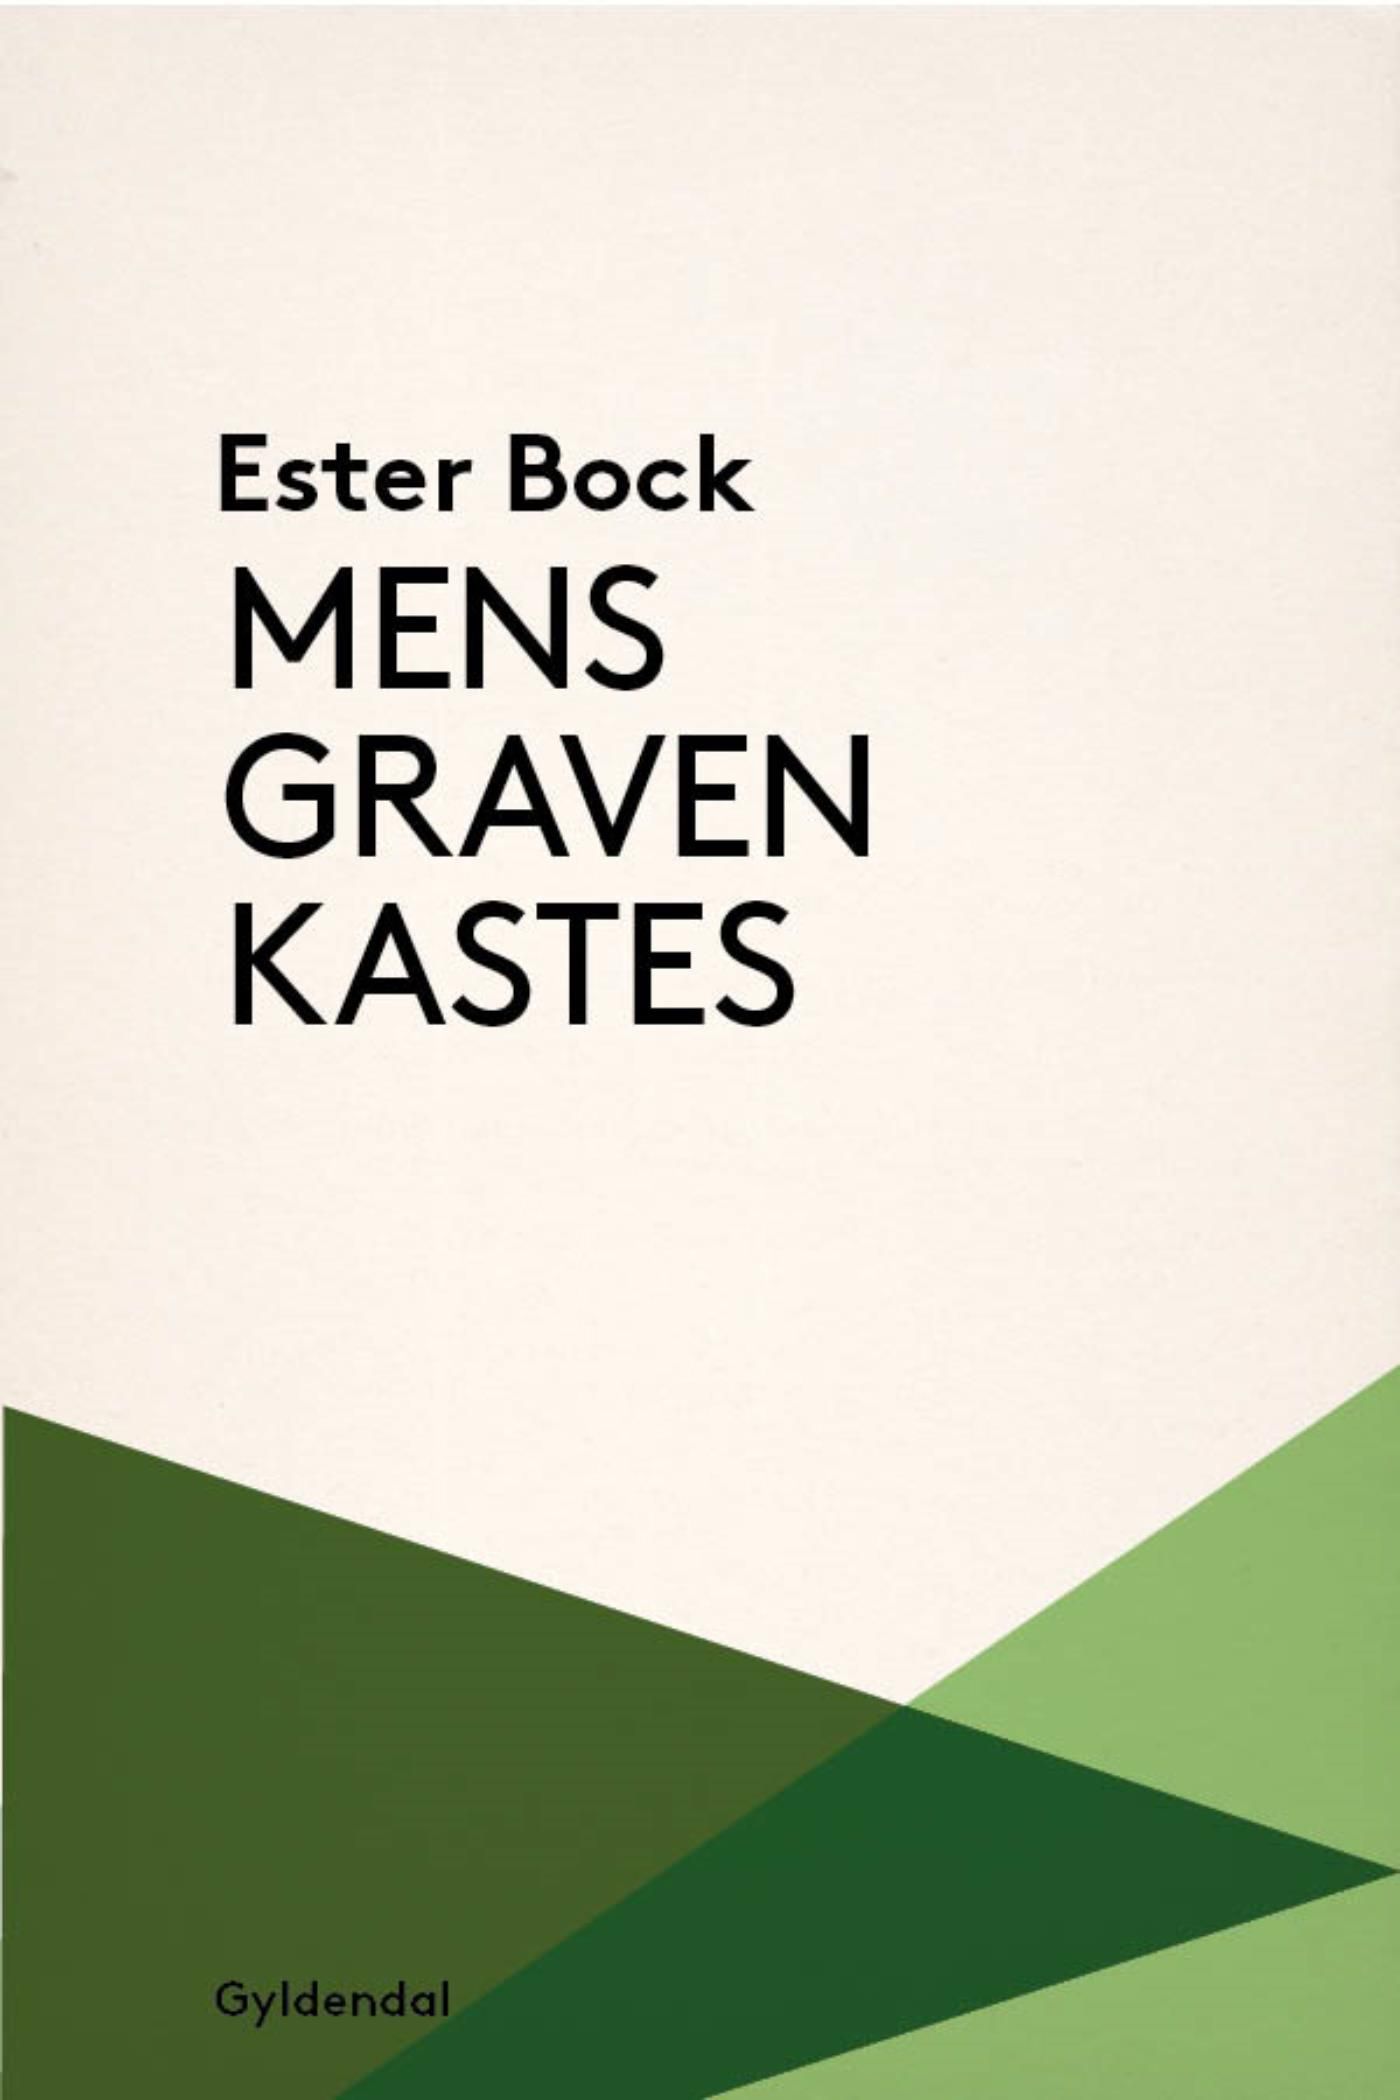 Mens graven kastes, eBook by Ester Bock